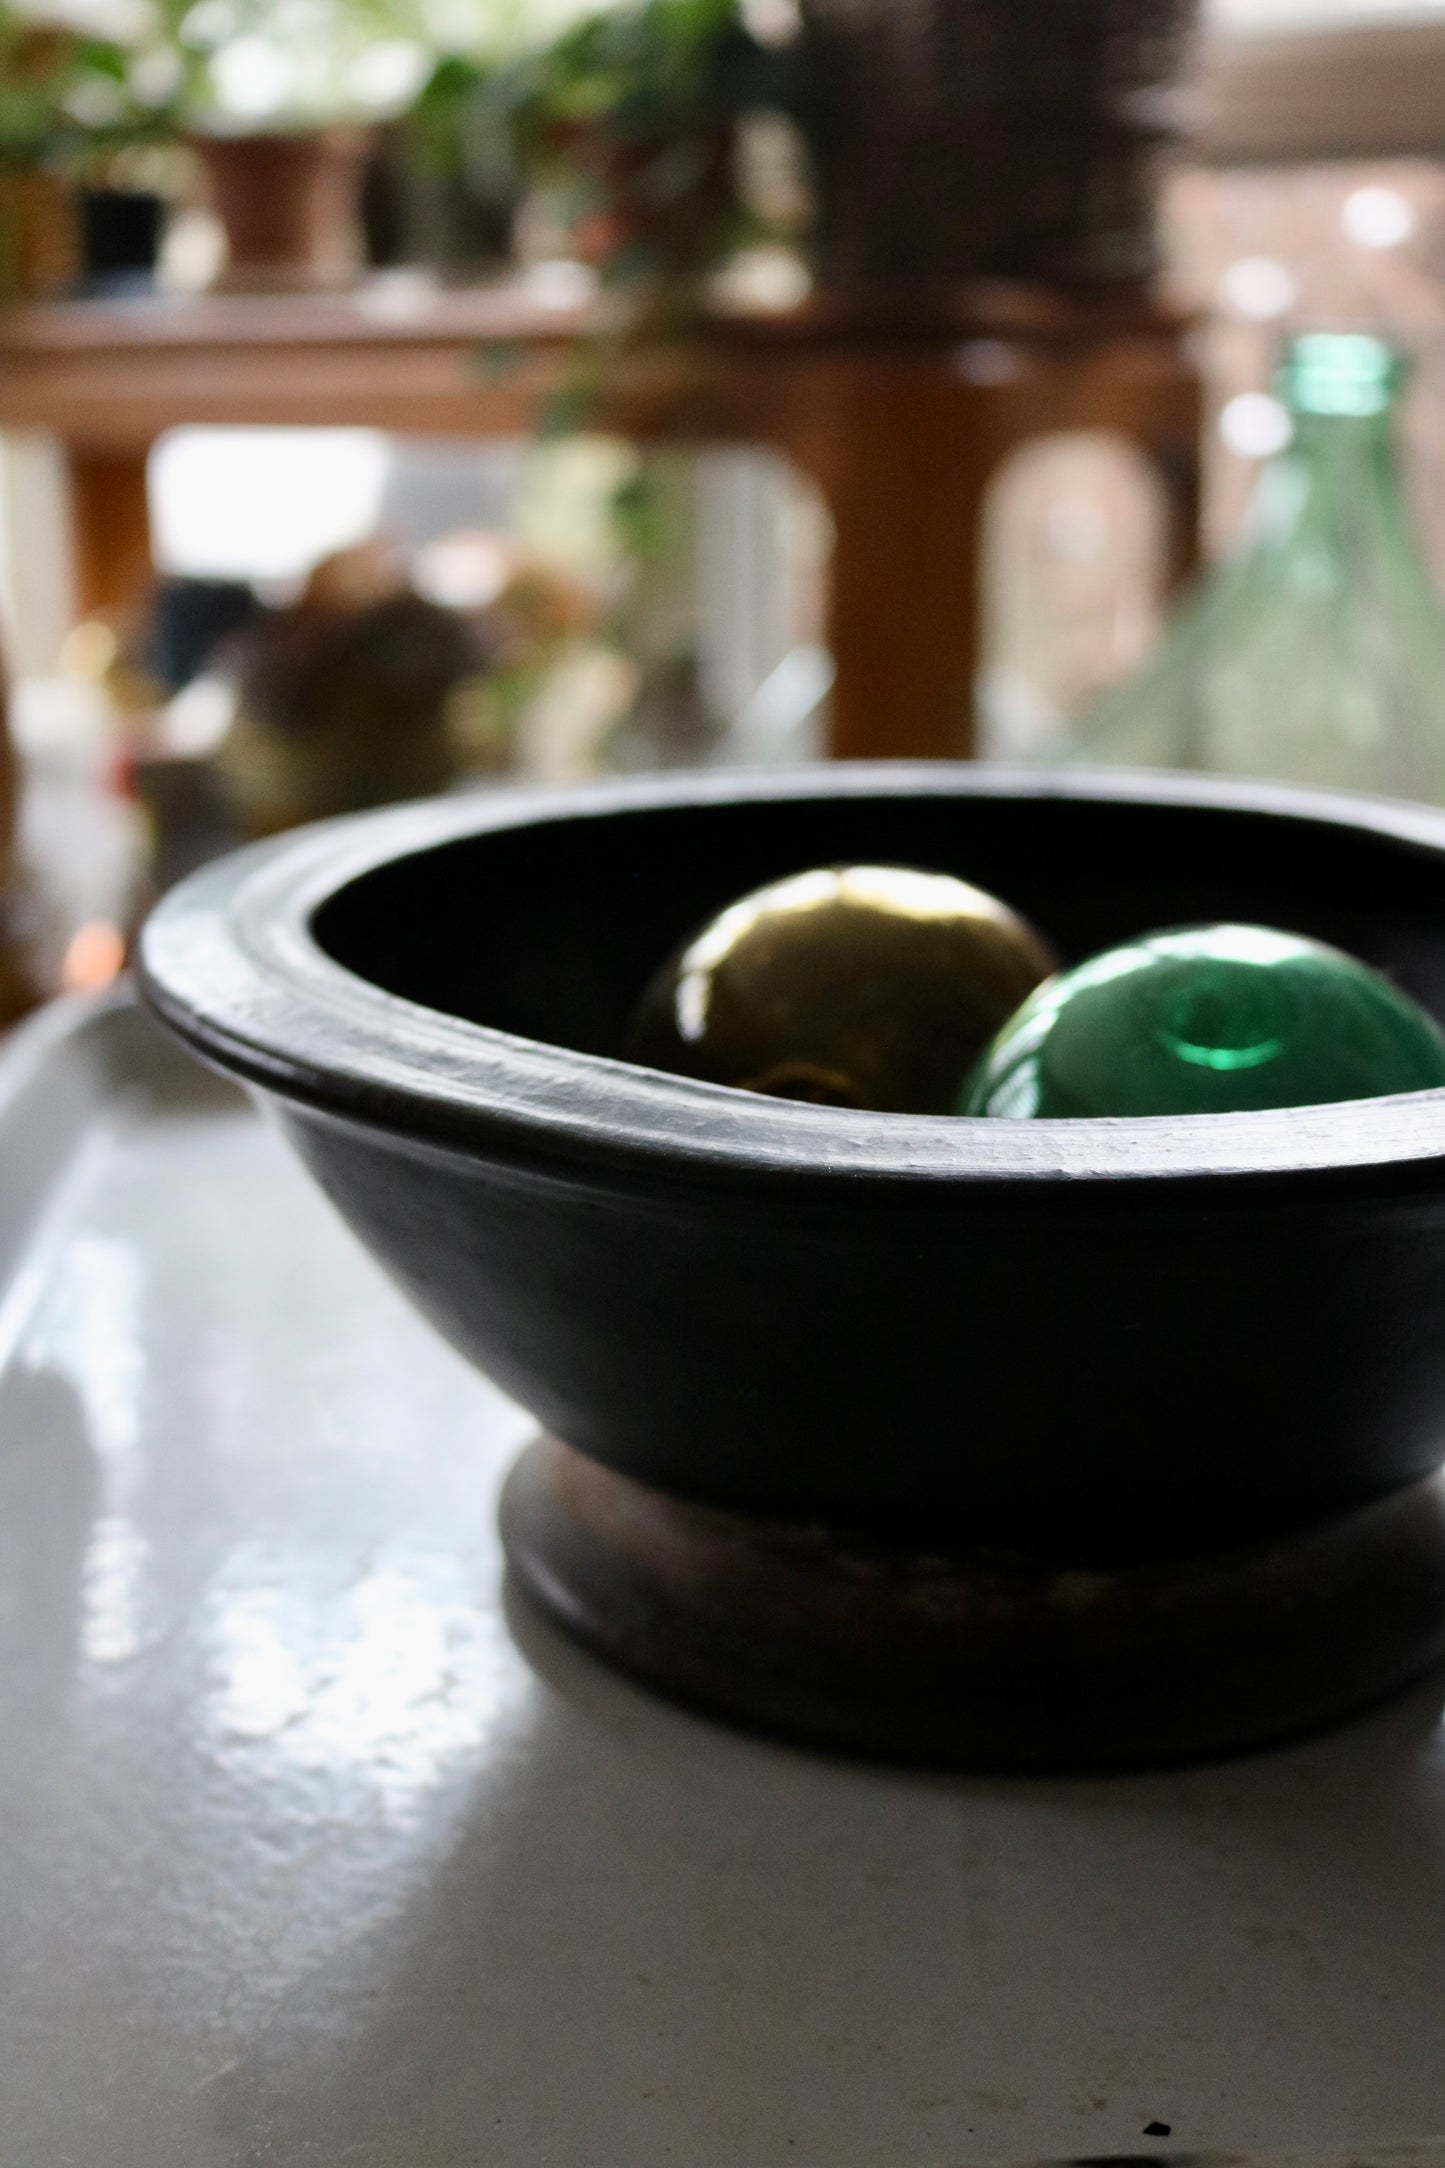 black pottery decorative bowl